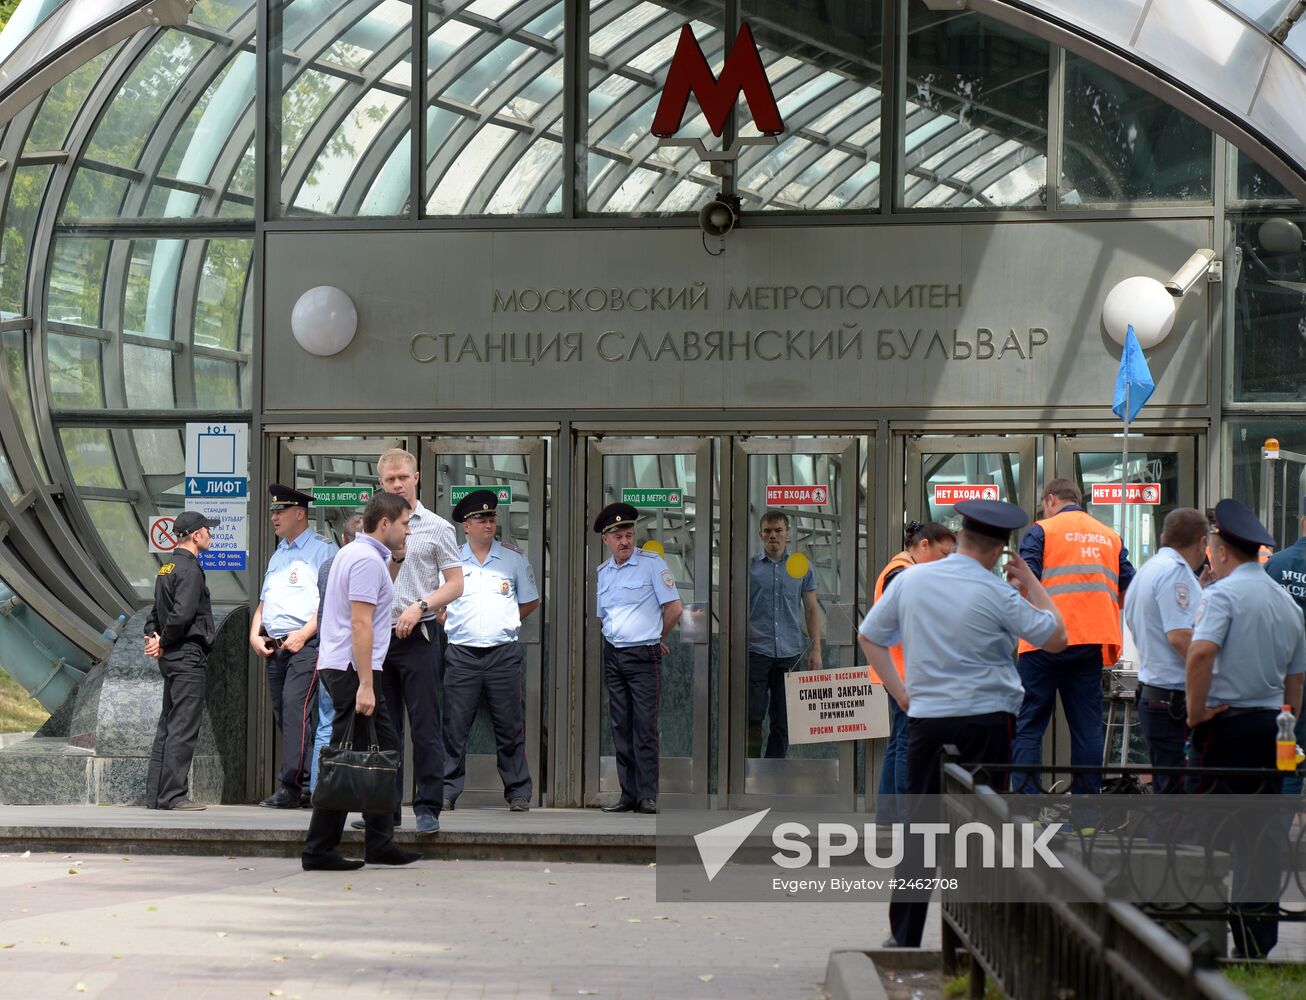 Metro railcar derailed between Park Pobedy -- Slavyansky Boulevard stations